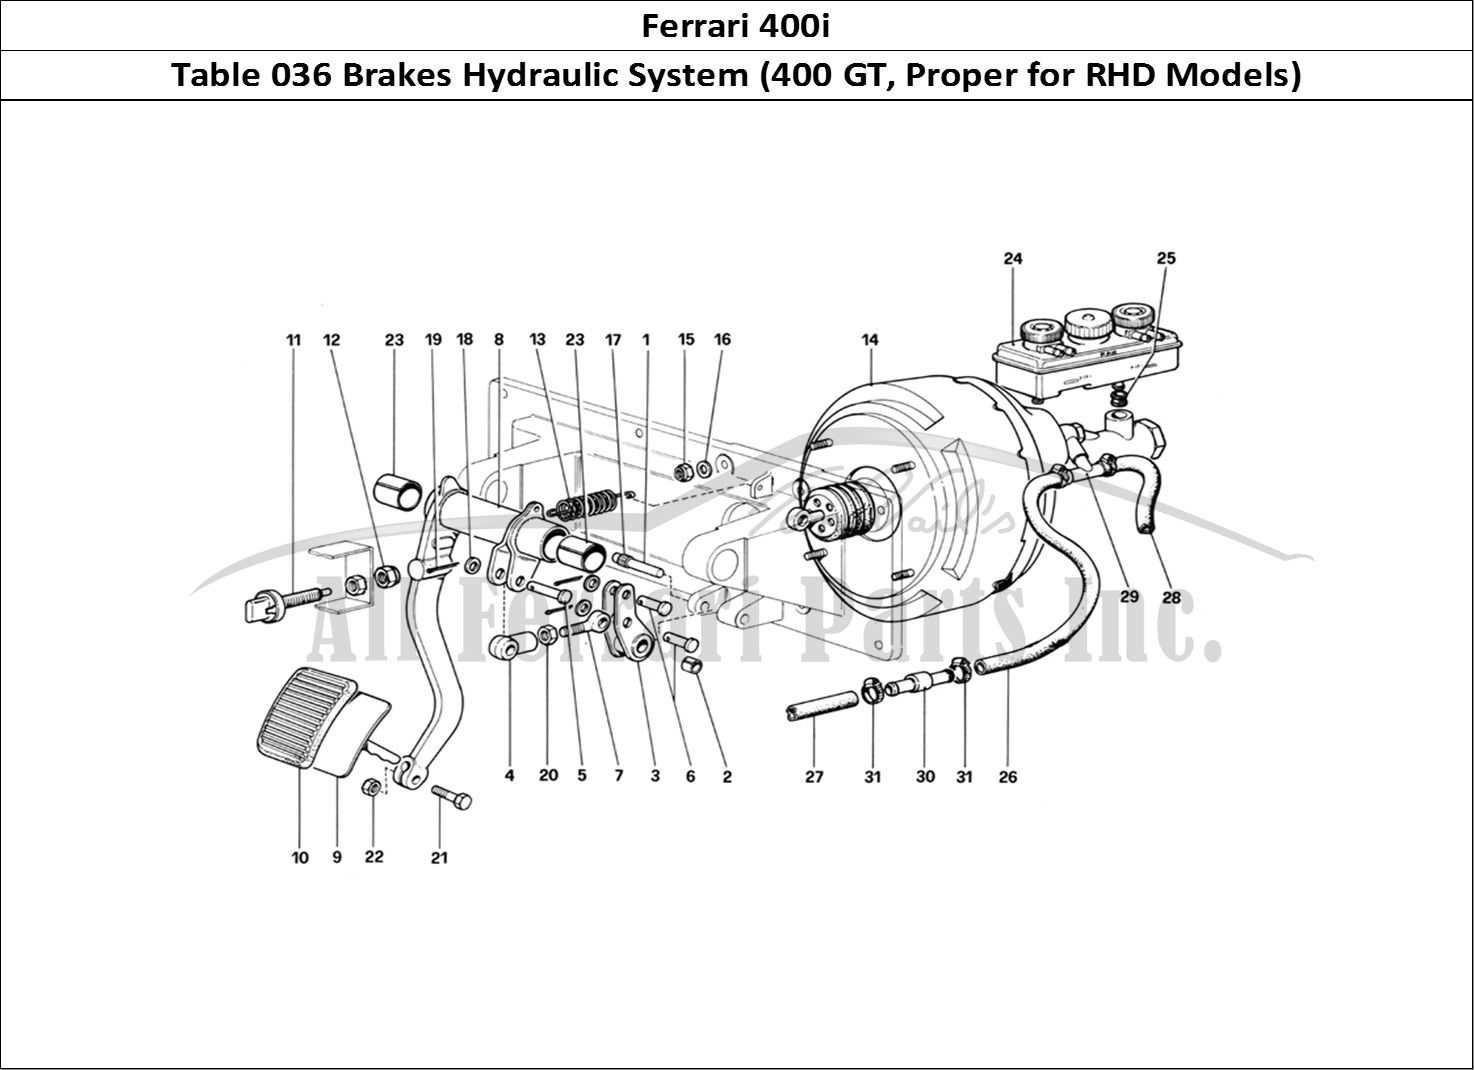 Ferrari Parts Ferrari 400i (1983 Mechanical) Page 036 Brakes Hydraulic Controll